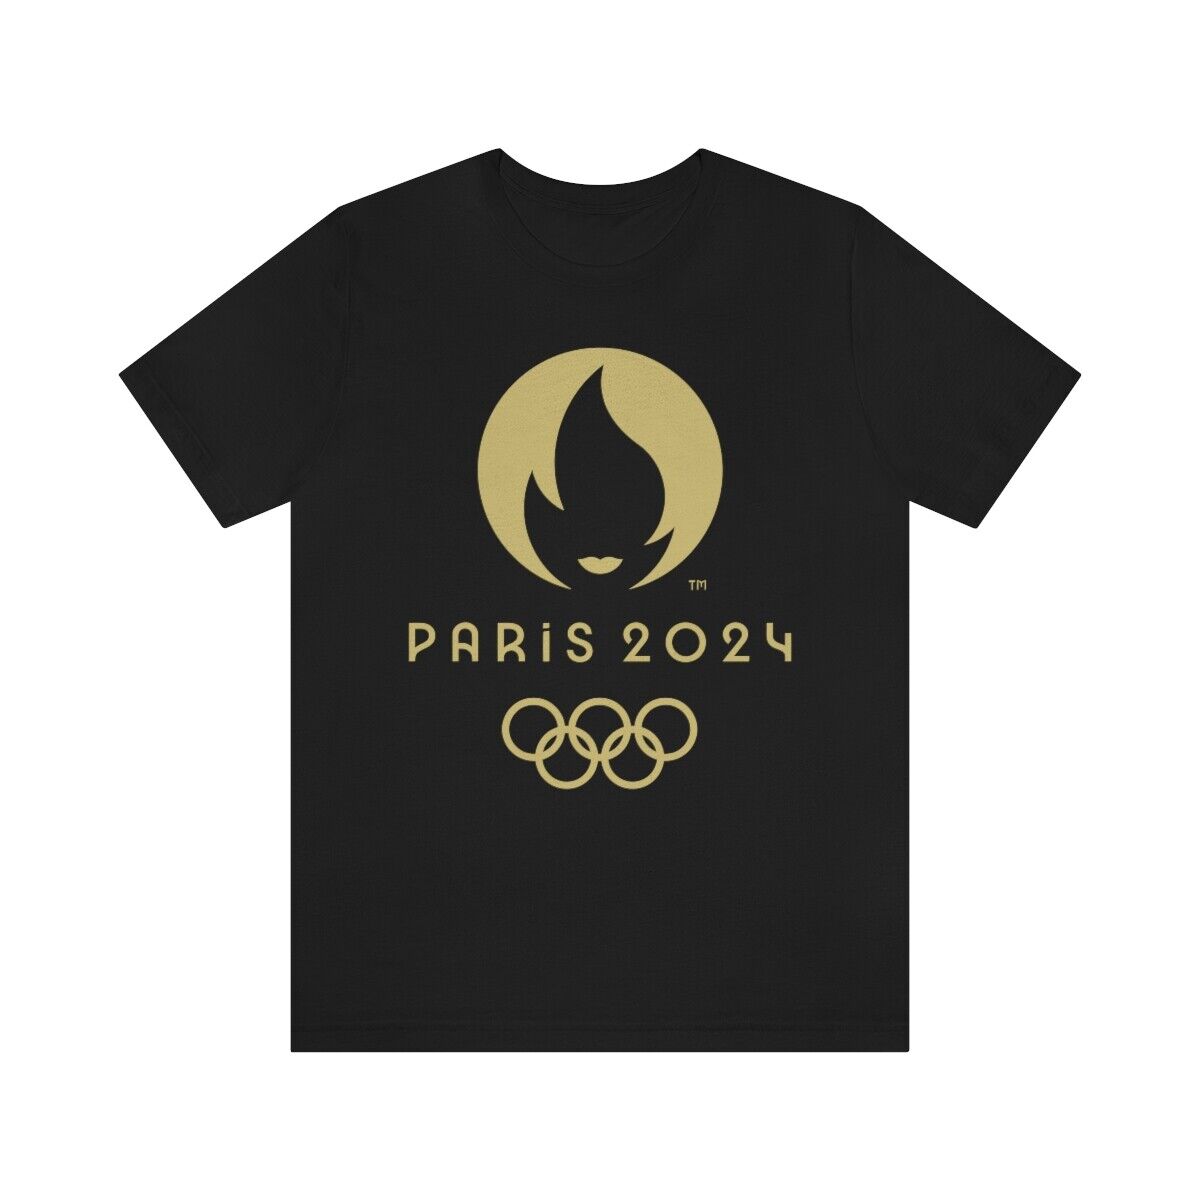 Tee shirt noir Paris 2024